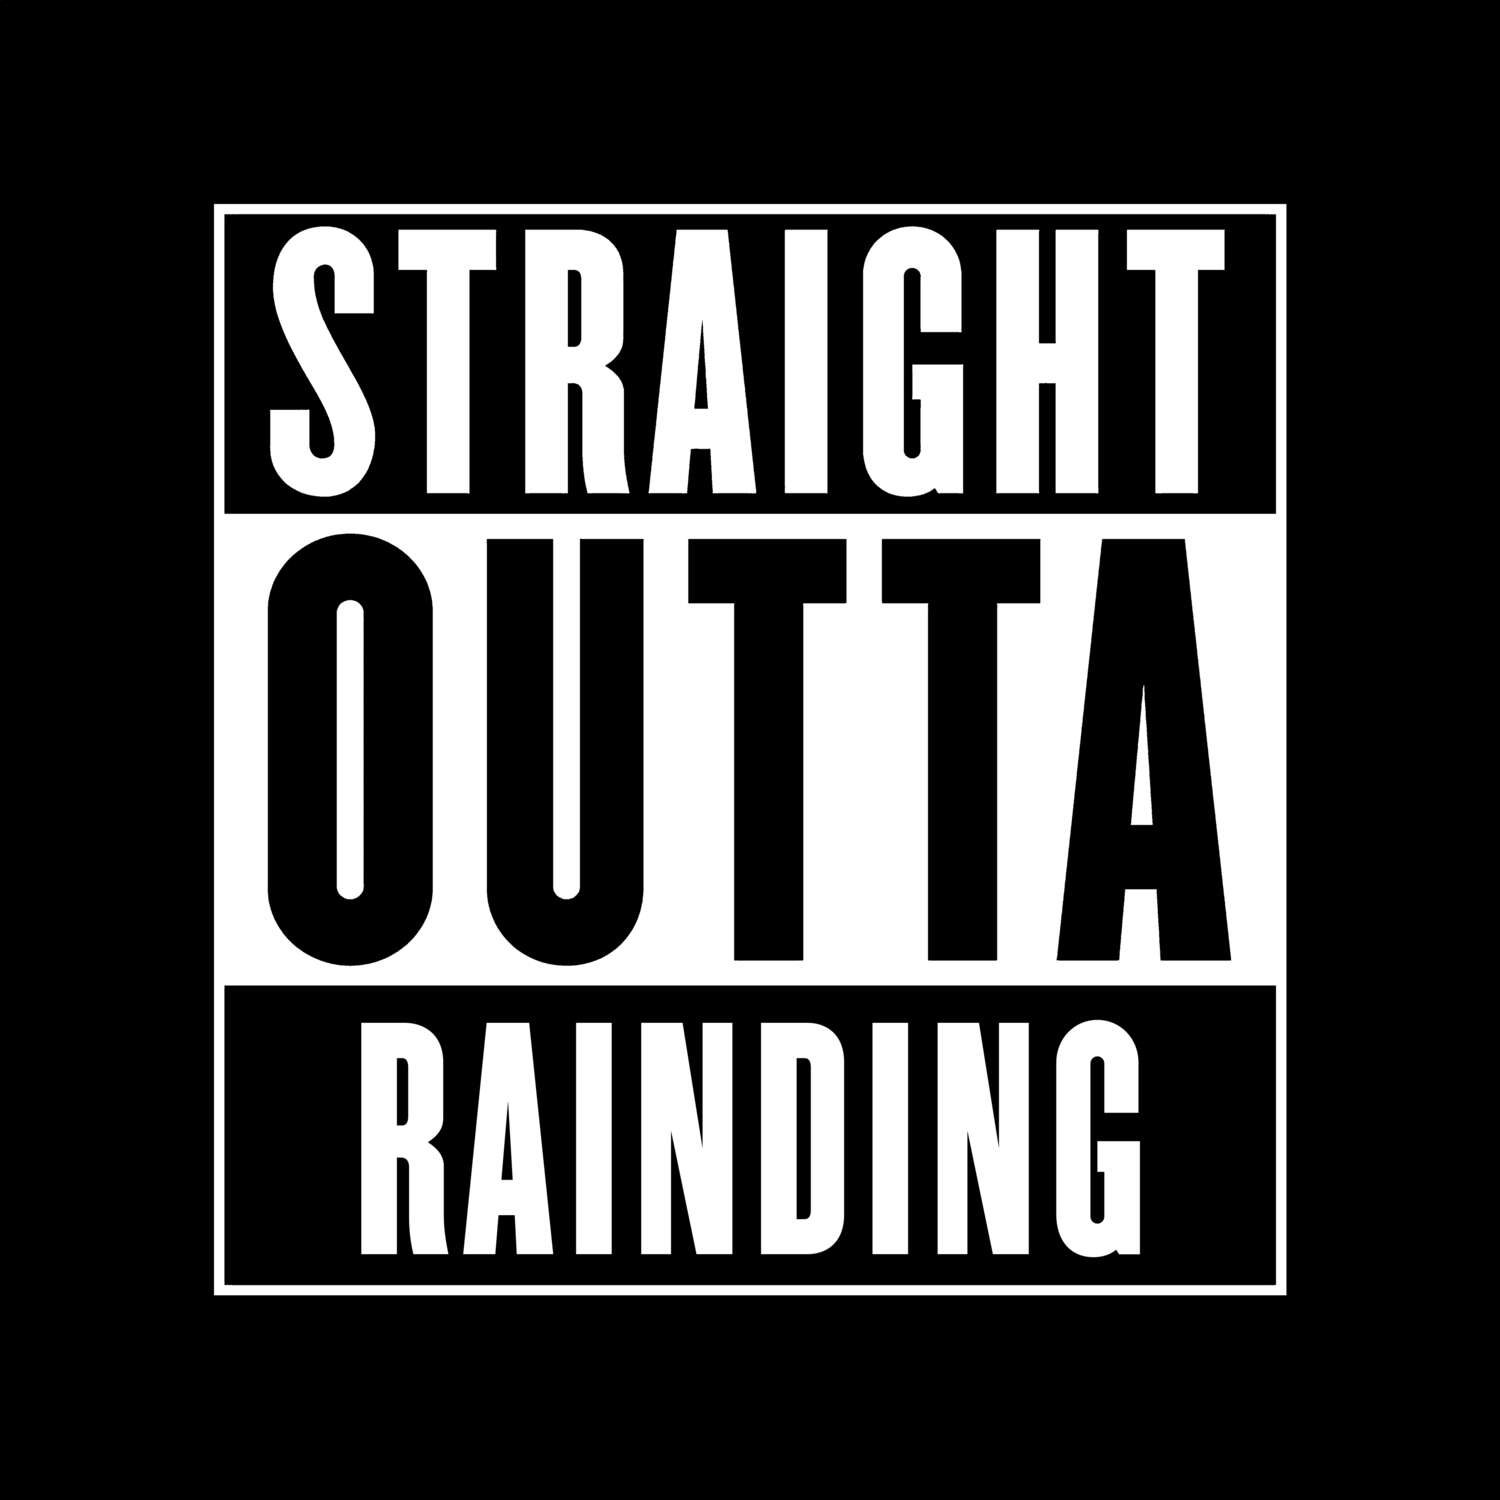 Rainding T-Shirt »Straight Outta«